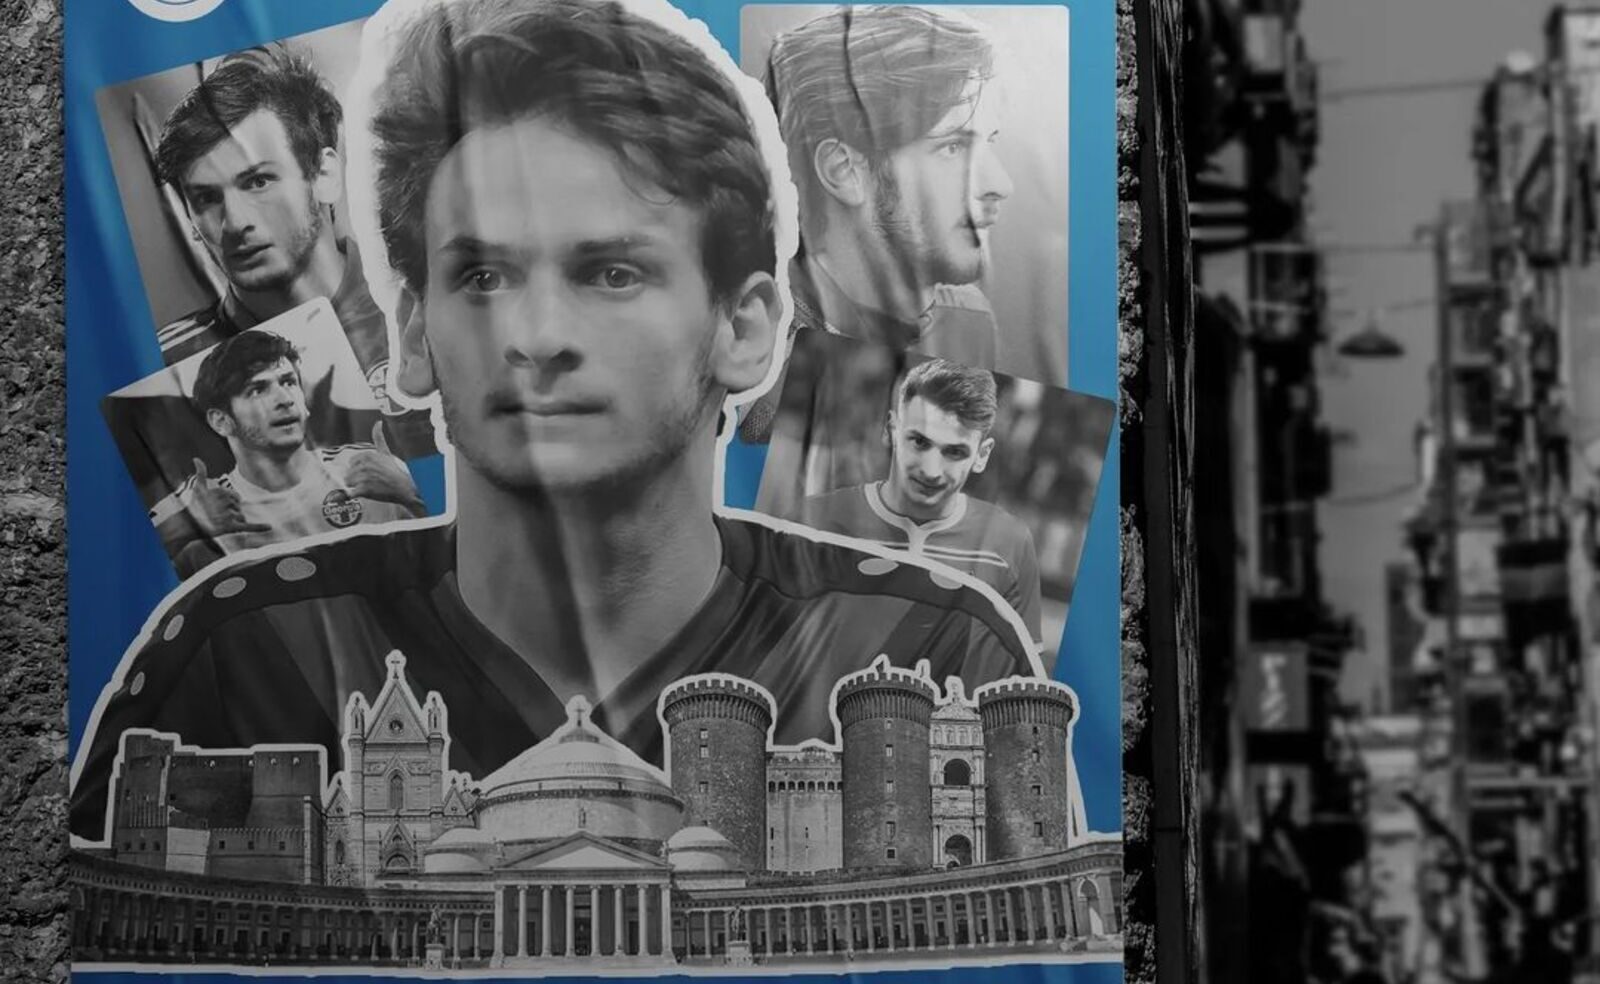 Poster di benvenuto a Khvicha Kvaratskhelia al Napoli Calcio